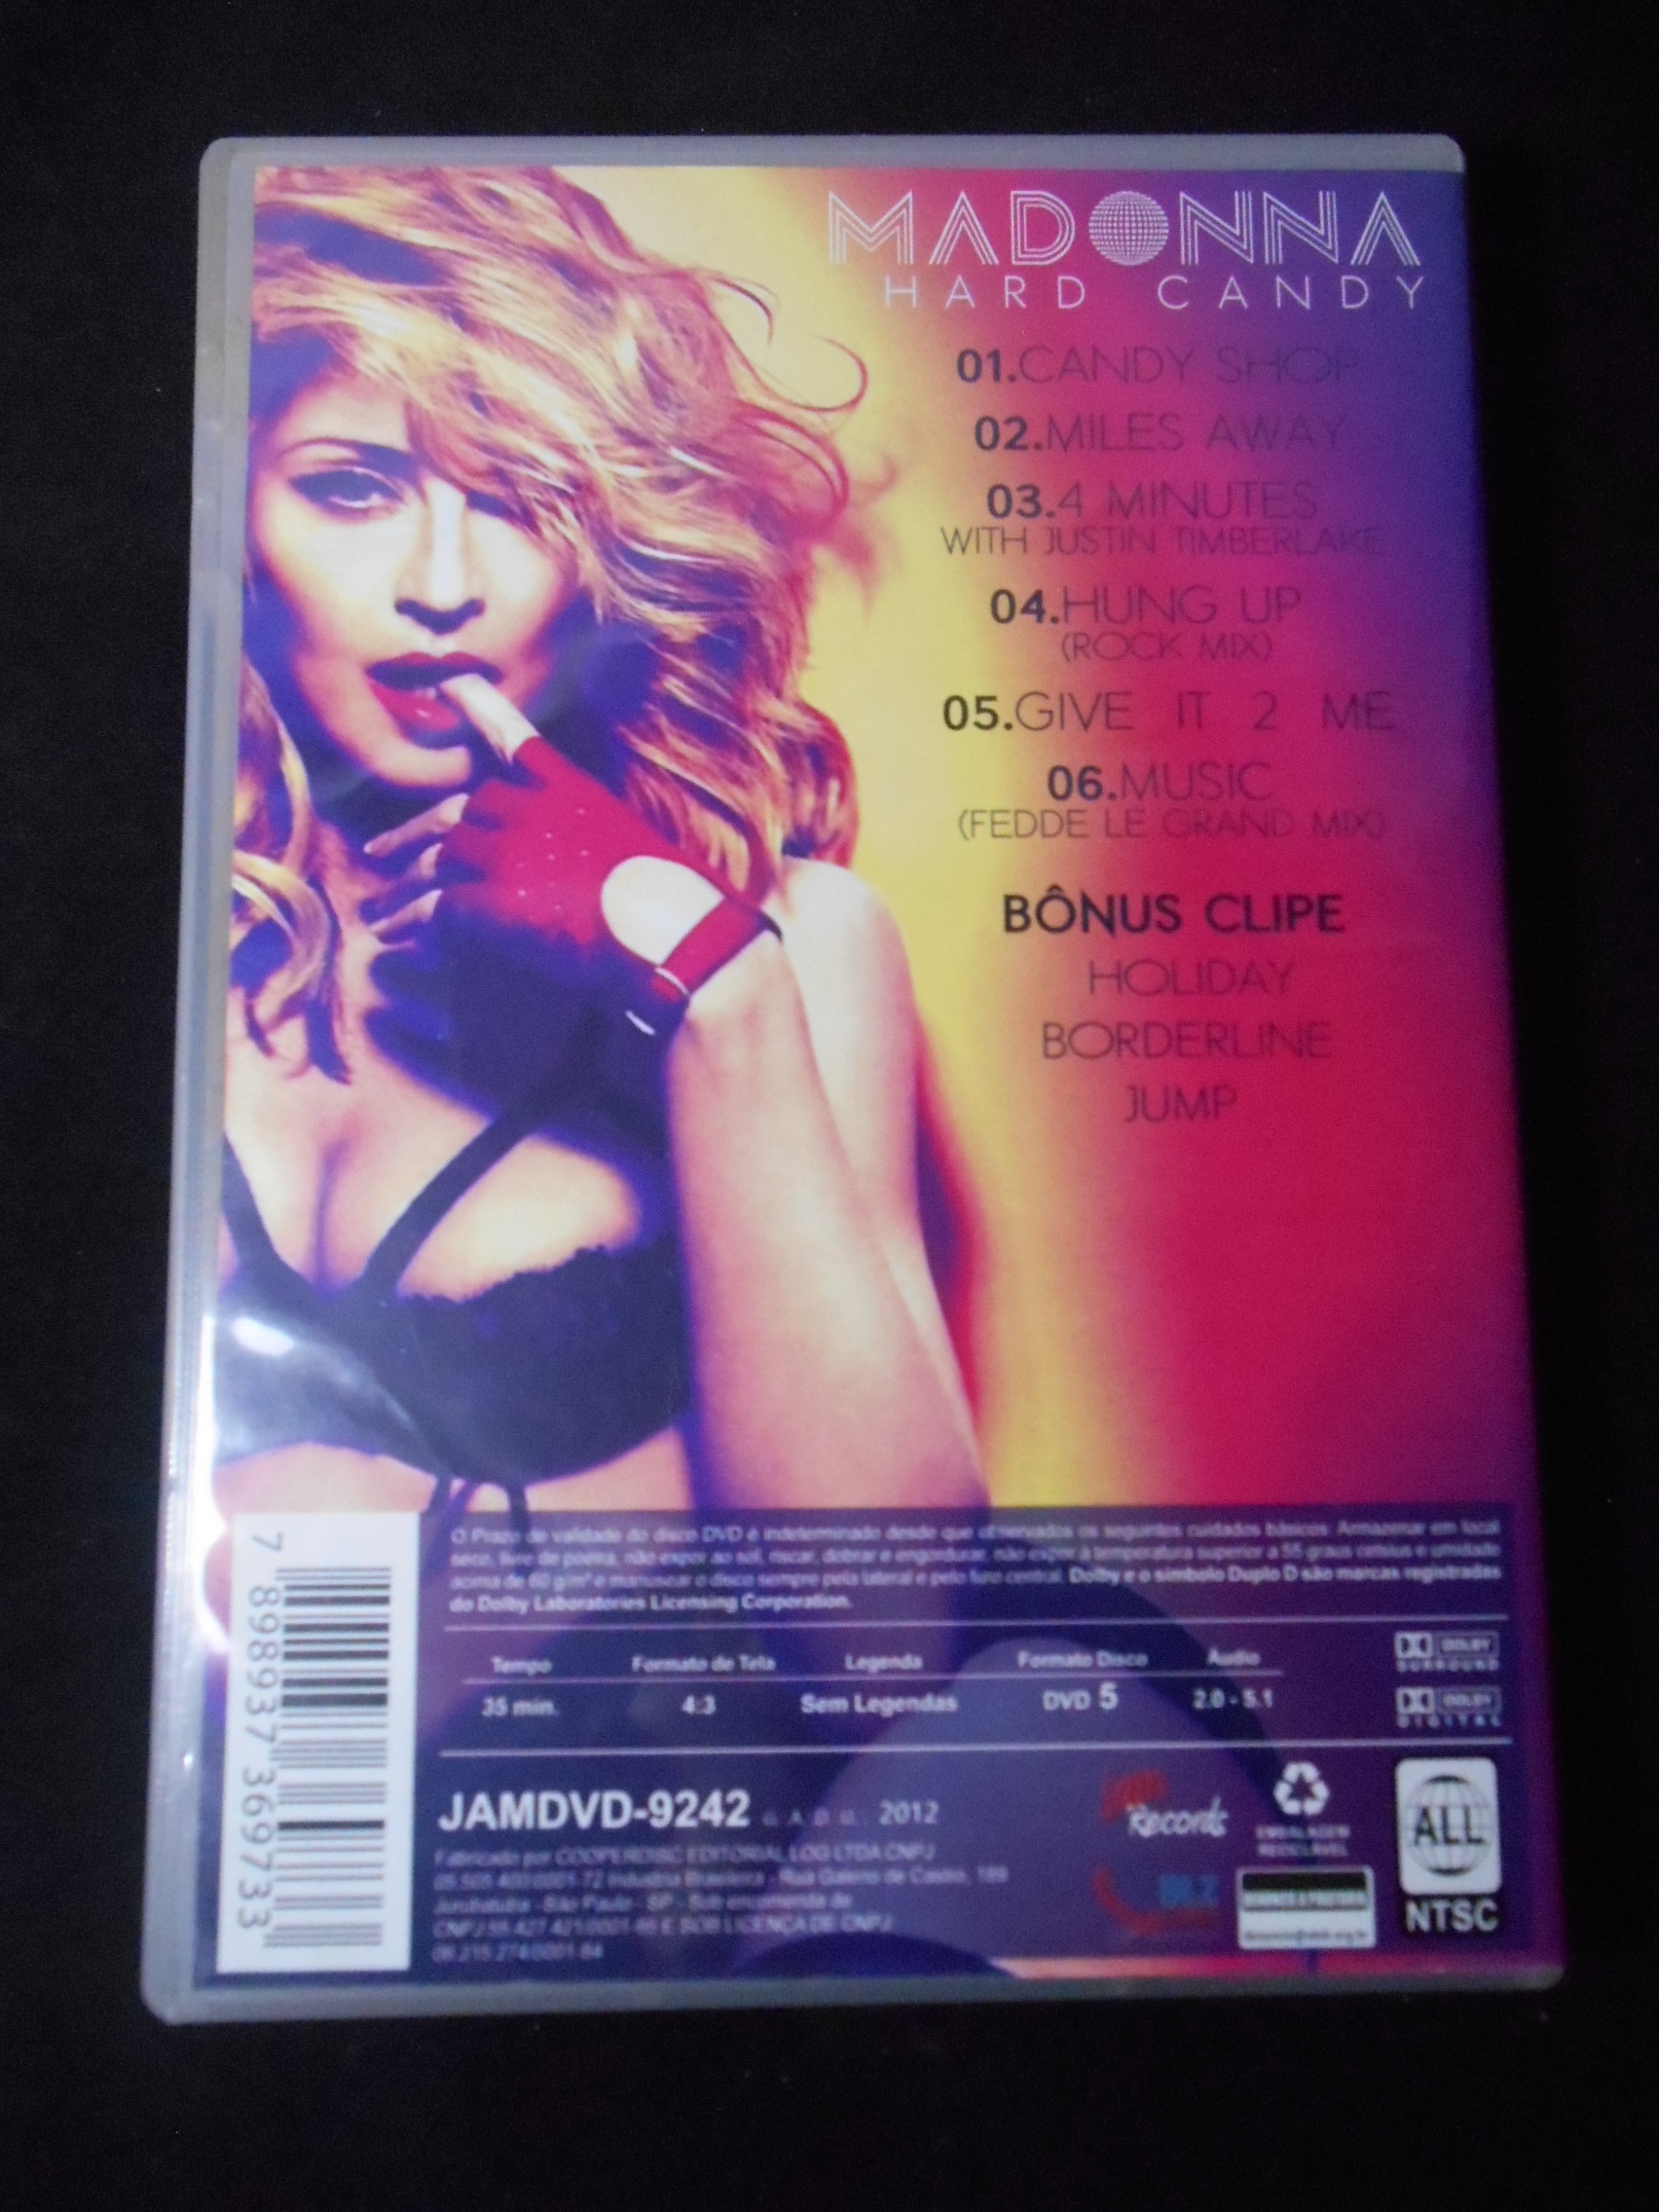 DVD - Madonna - Hard Candy Live From Roseland Ballroom 2008